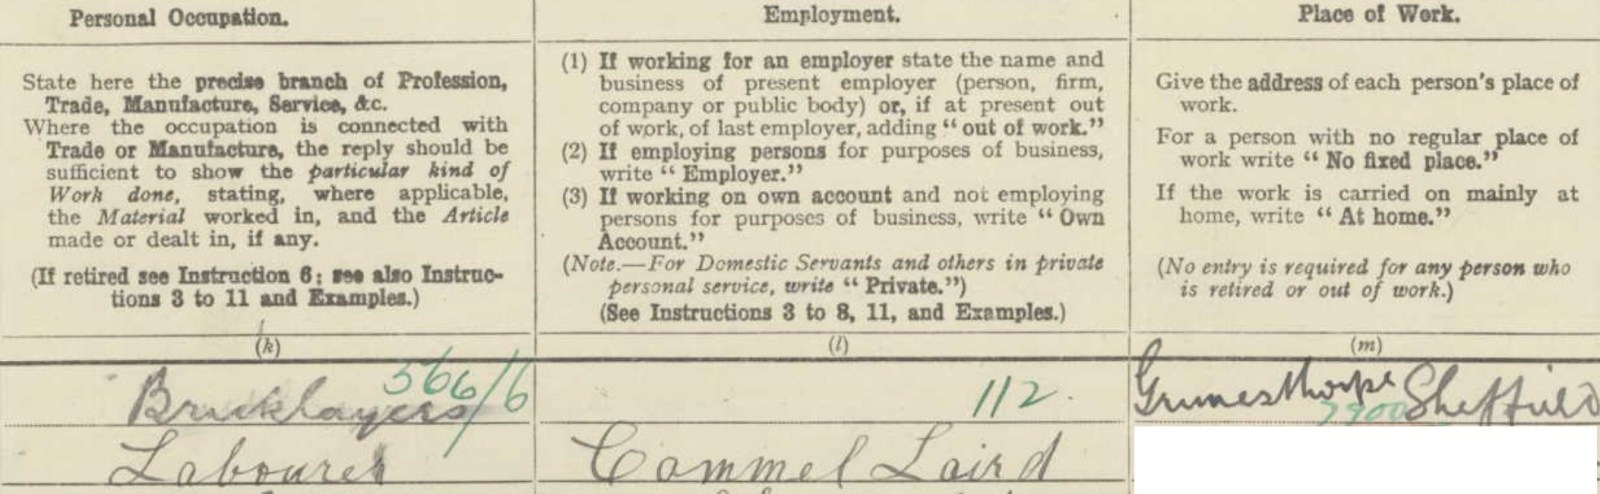 1921 Employment.jpg